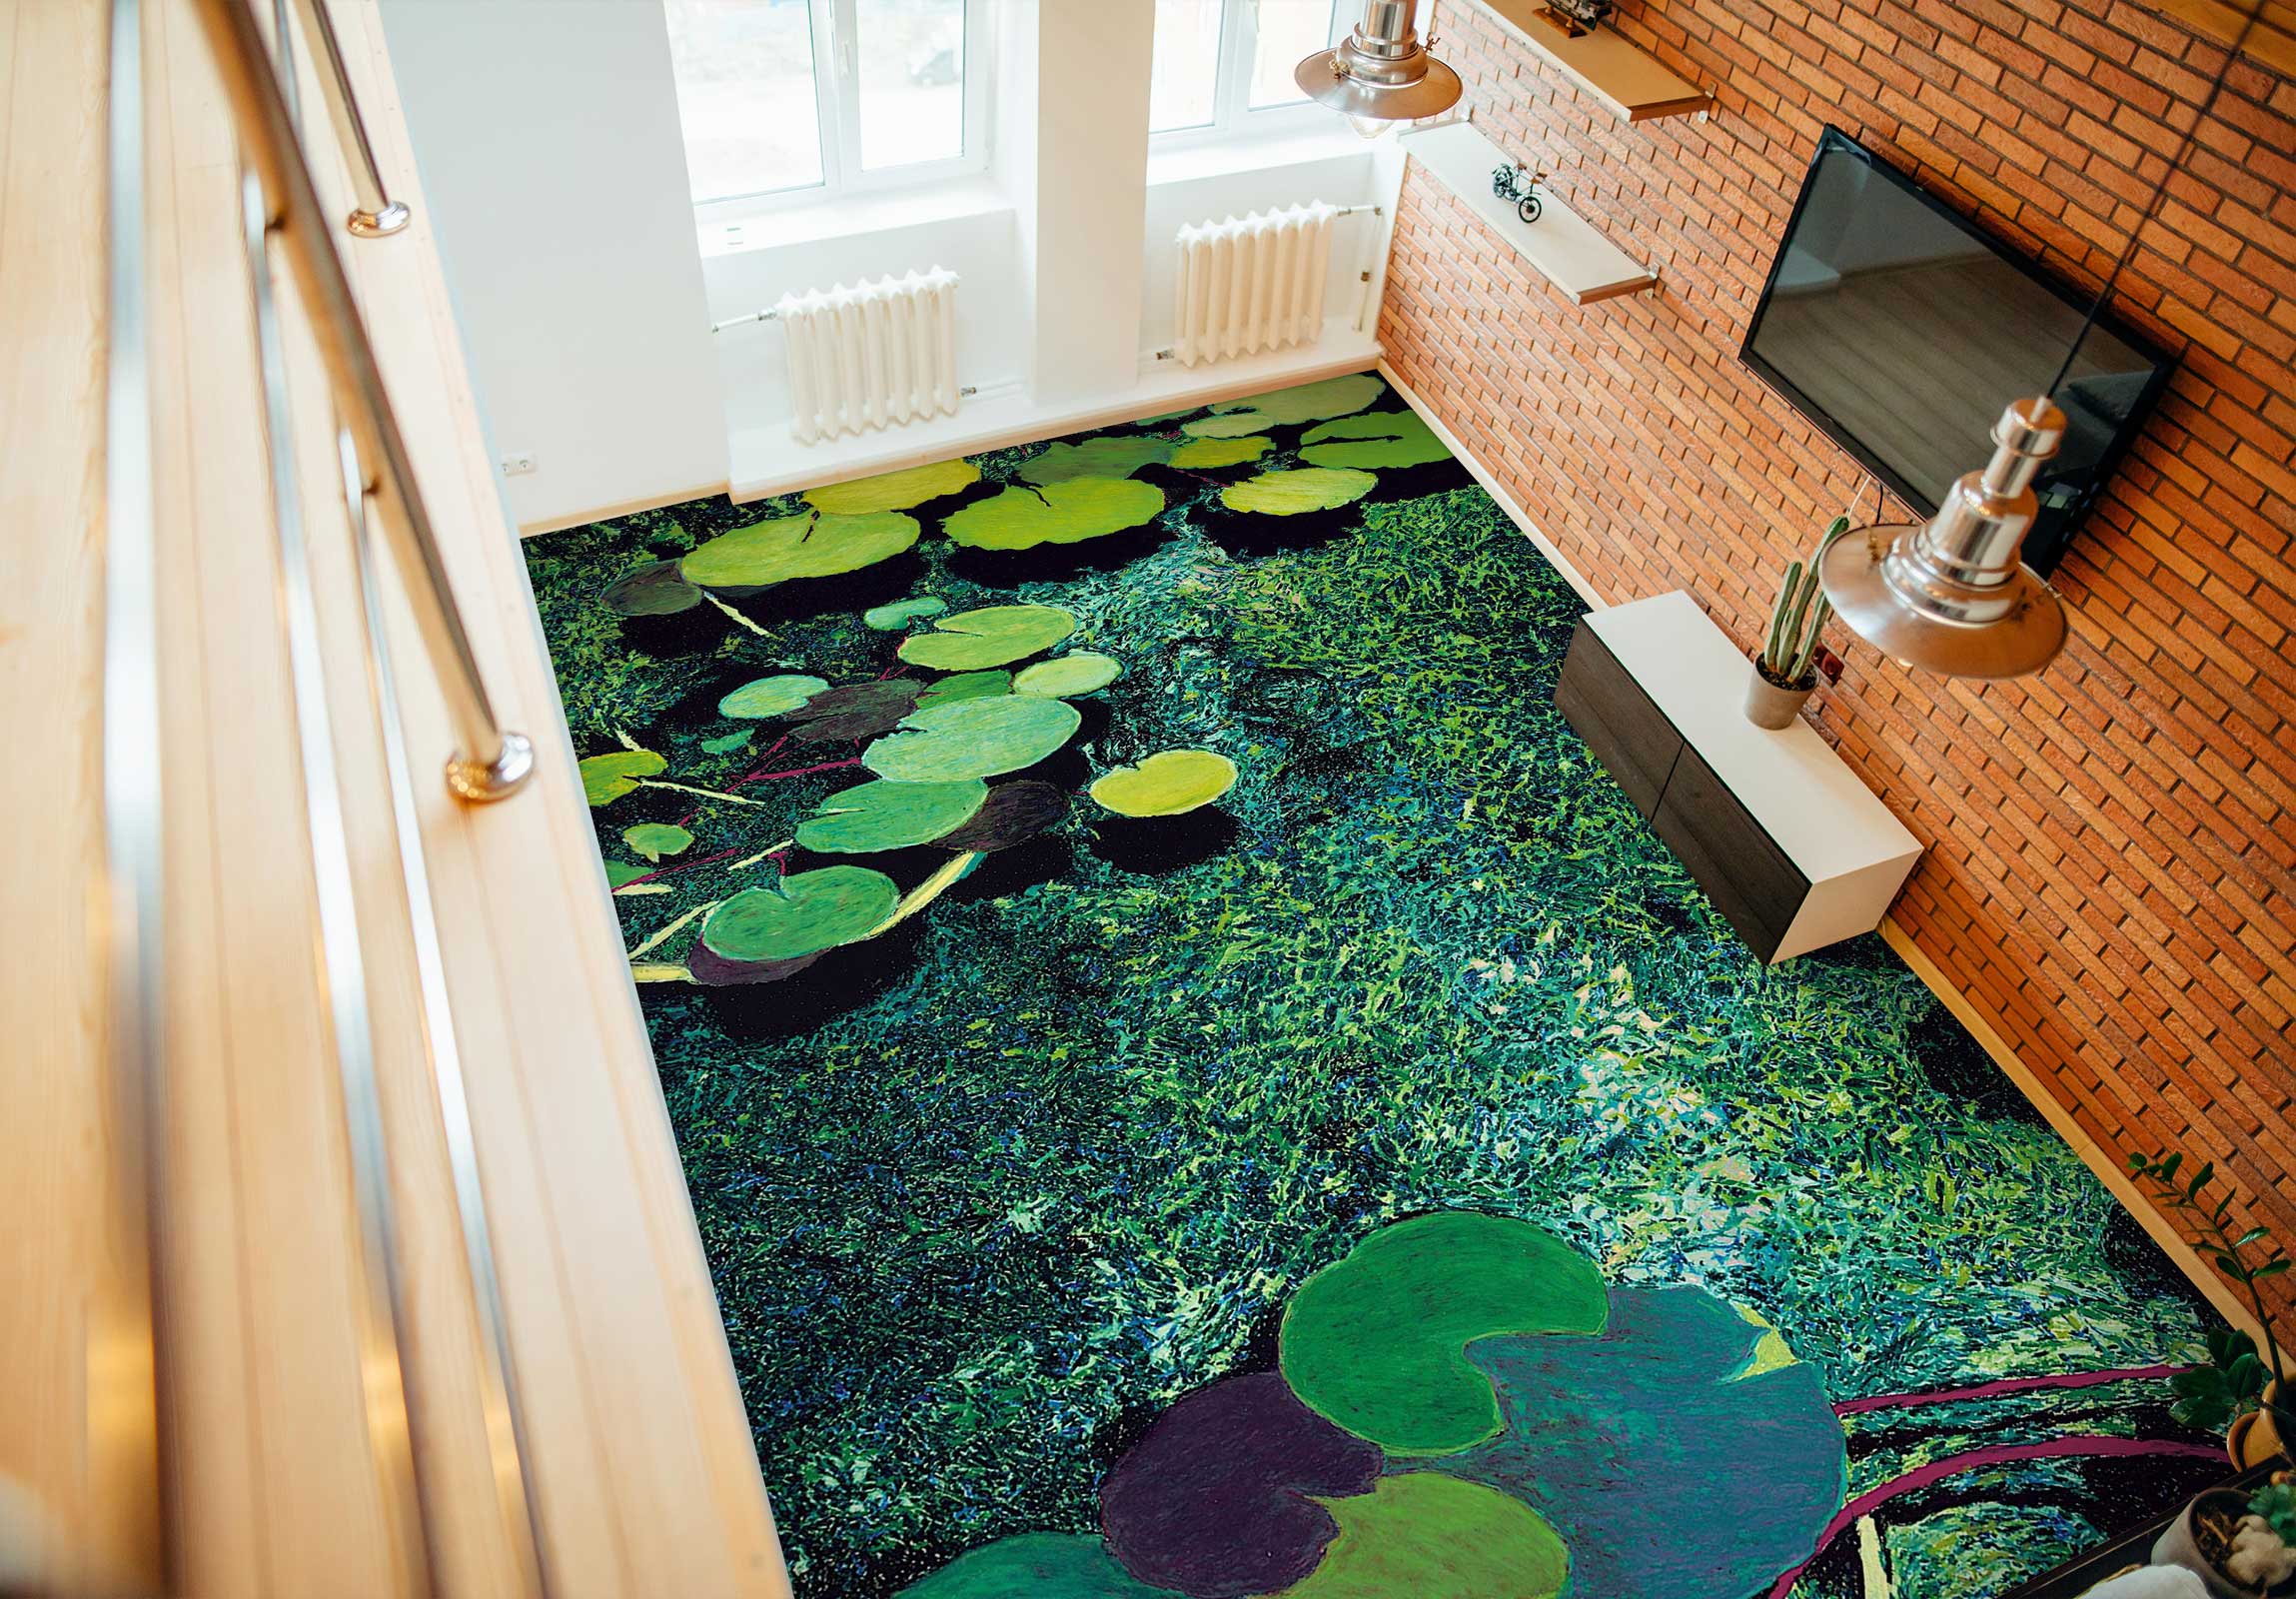 3D Green Lotus Pond 96120 Allan P. Friedlander Floor Mural  Wallpaper Murals Self-Adhesive Removable Print Epoxy